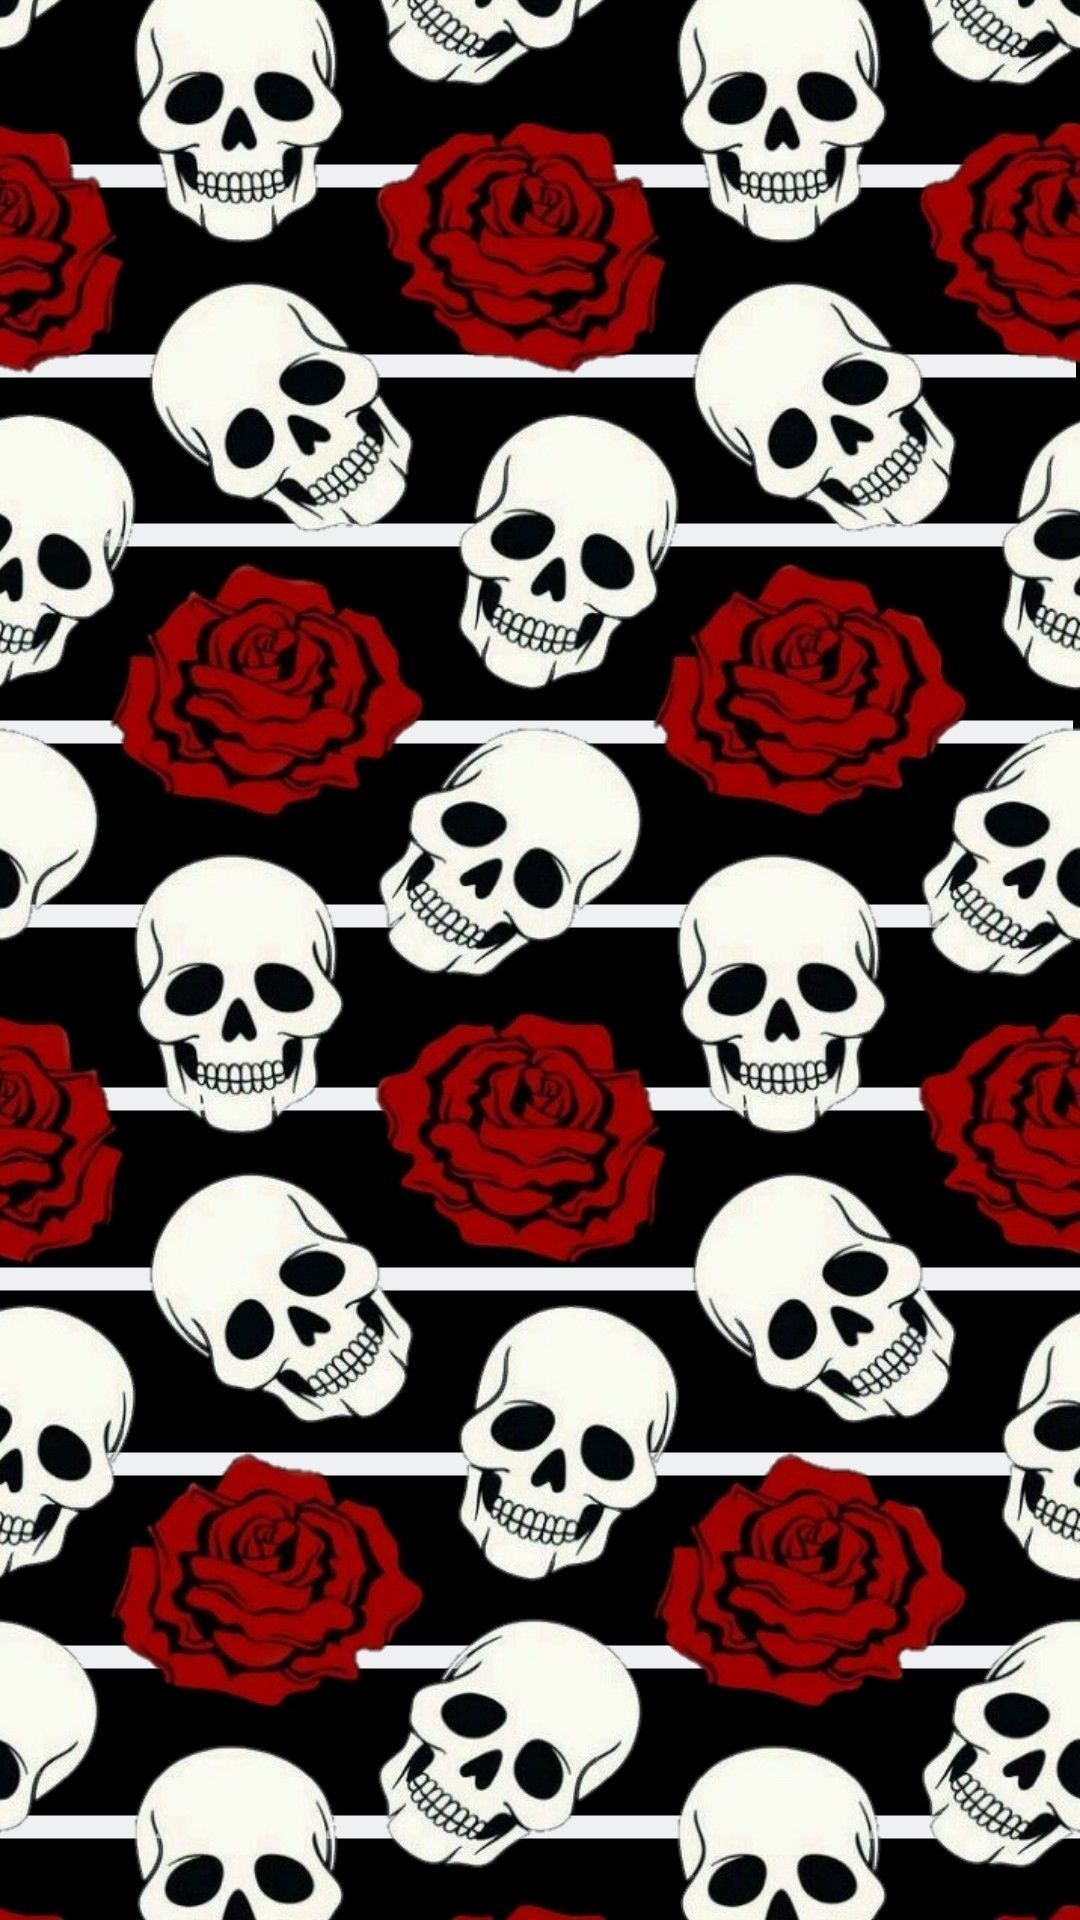 IPhone wallpaper of skulls and roses. - Emo, skull